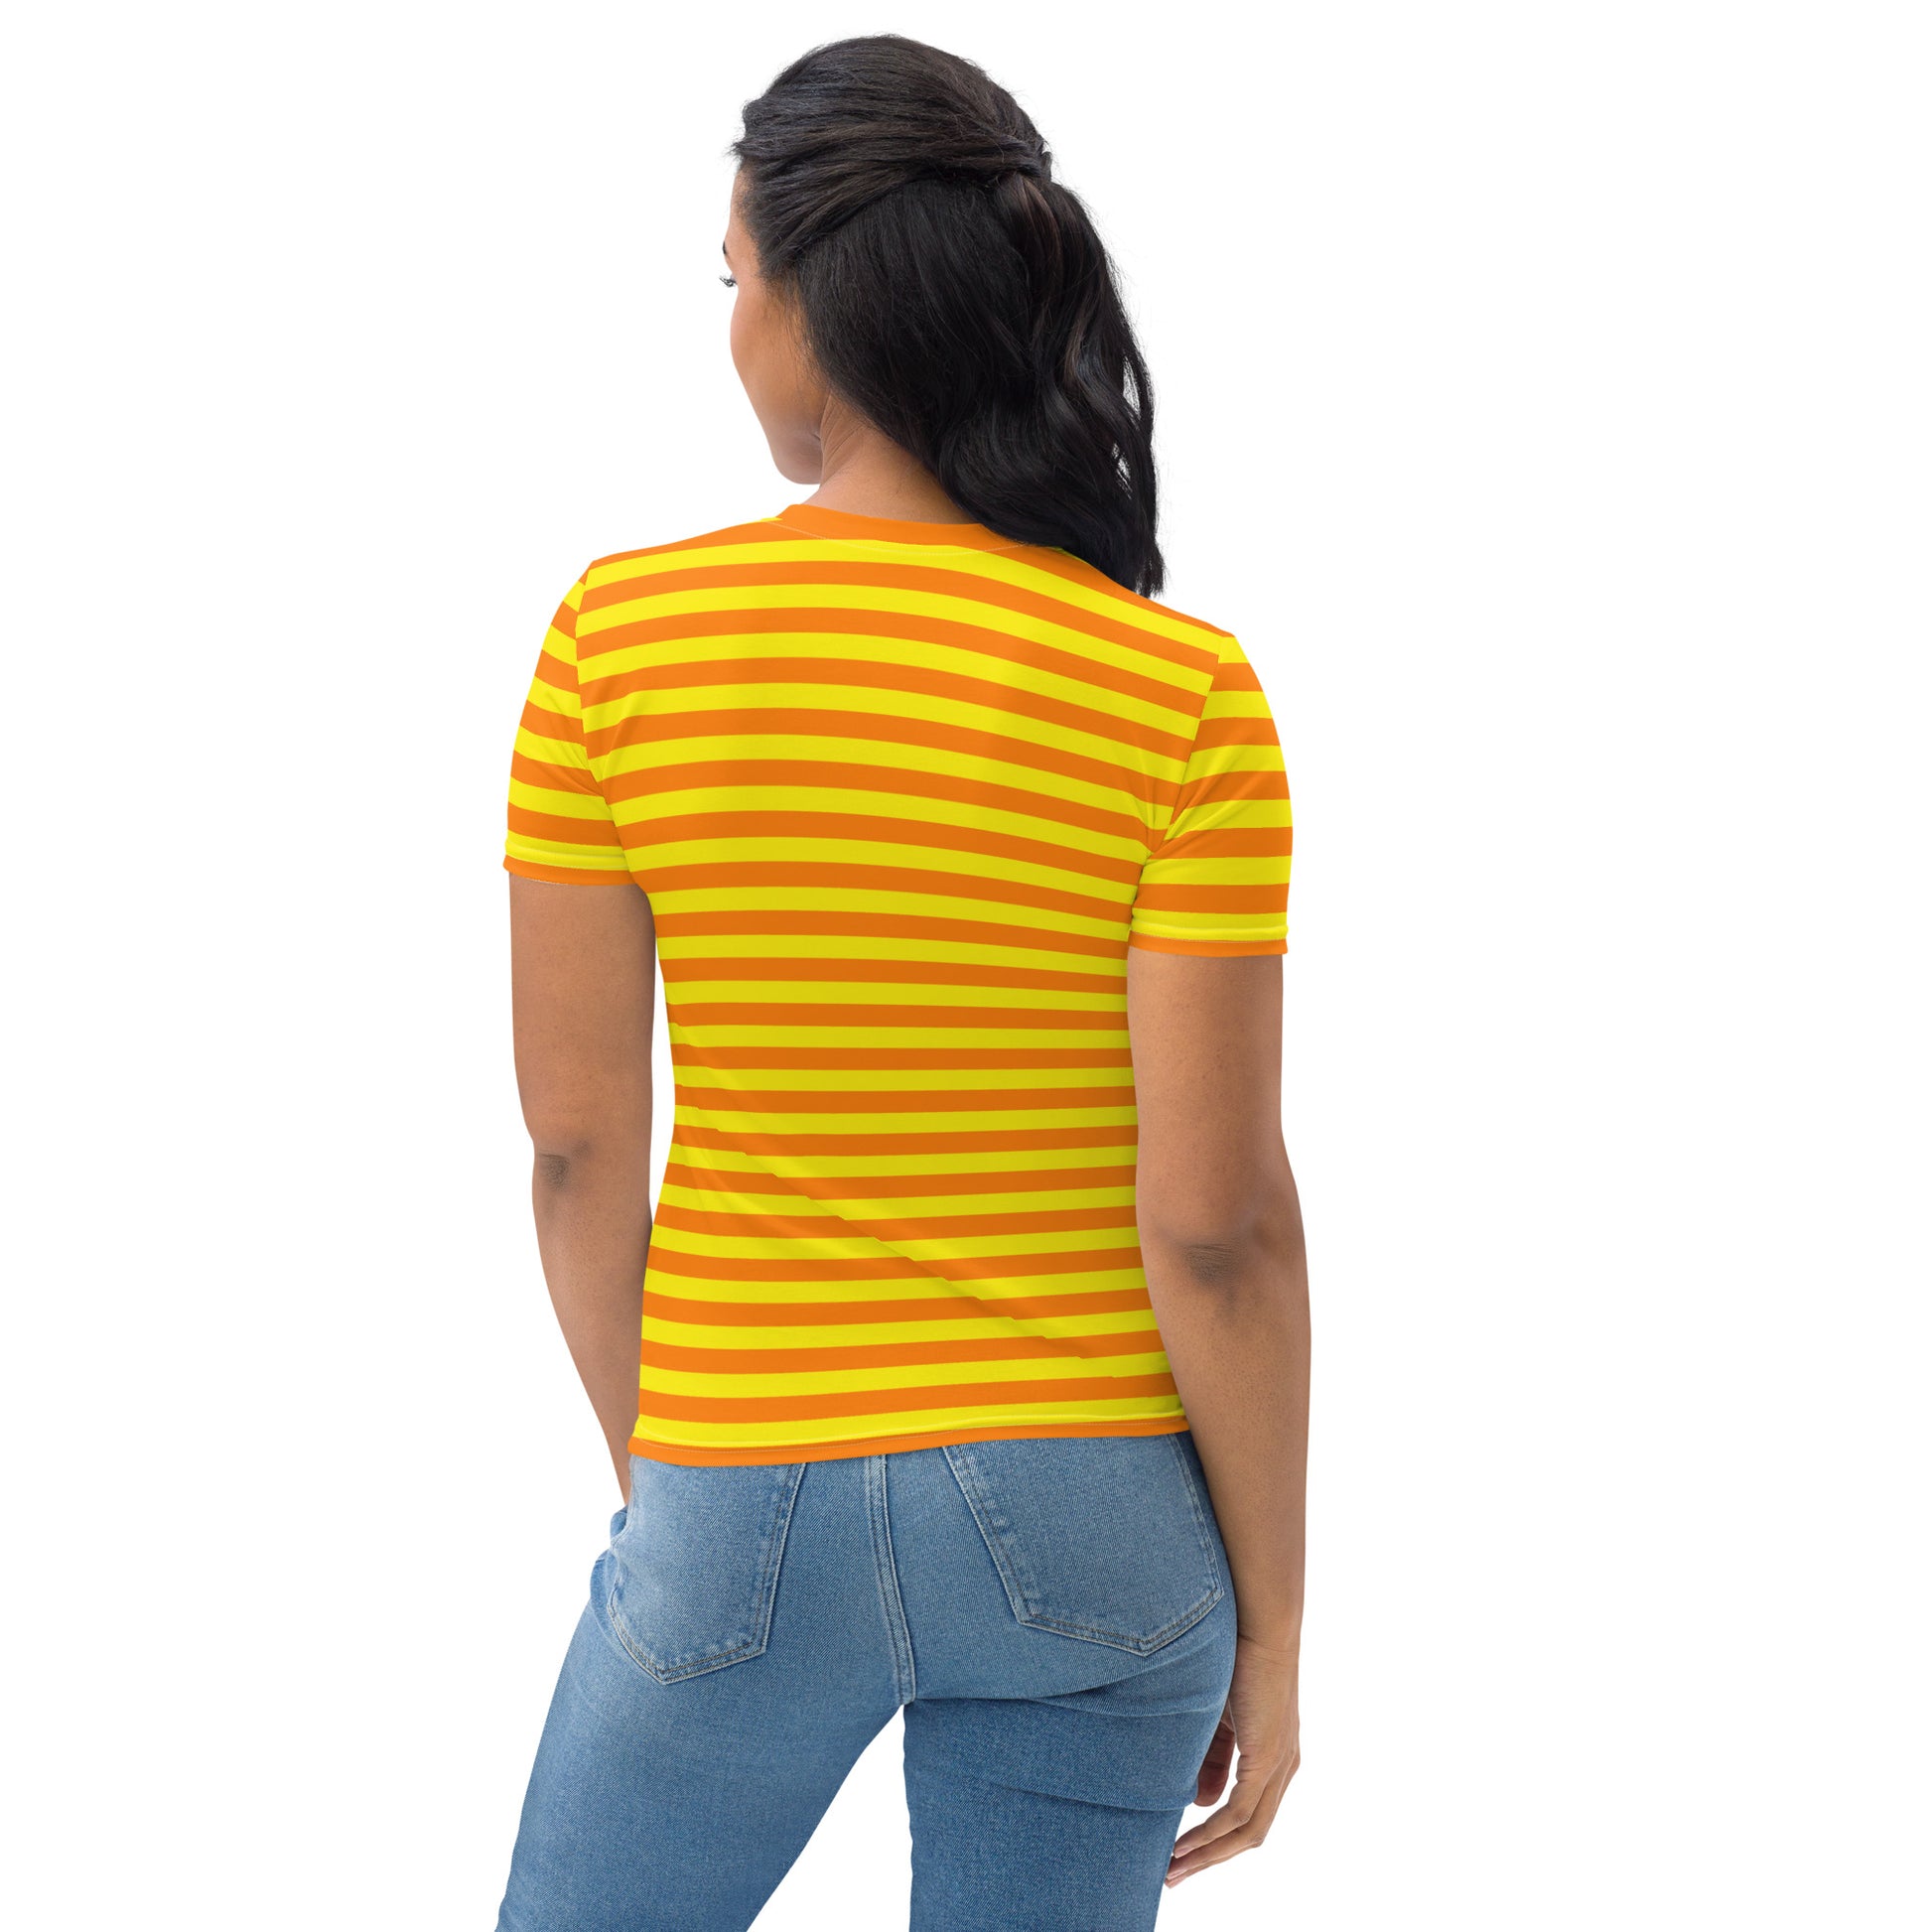 Orange and yellow striped summer t-shirt